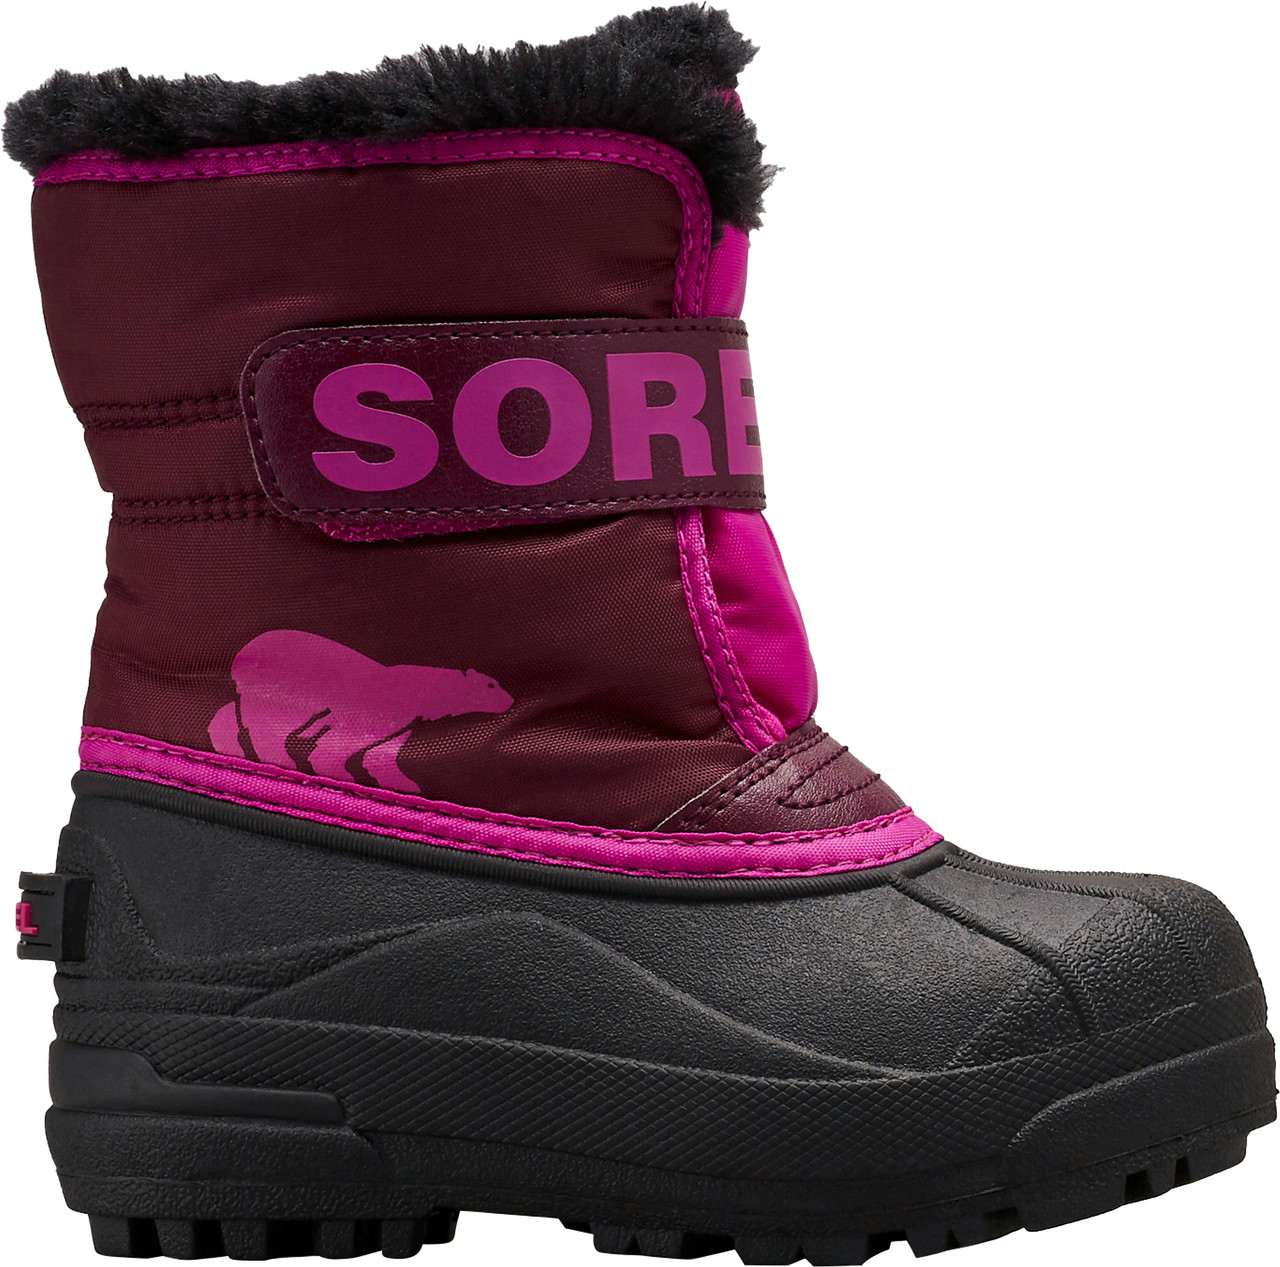 Snow Commander Winter Boots Purple Dahlia/Groovy Pink